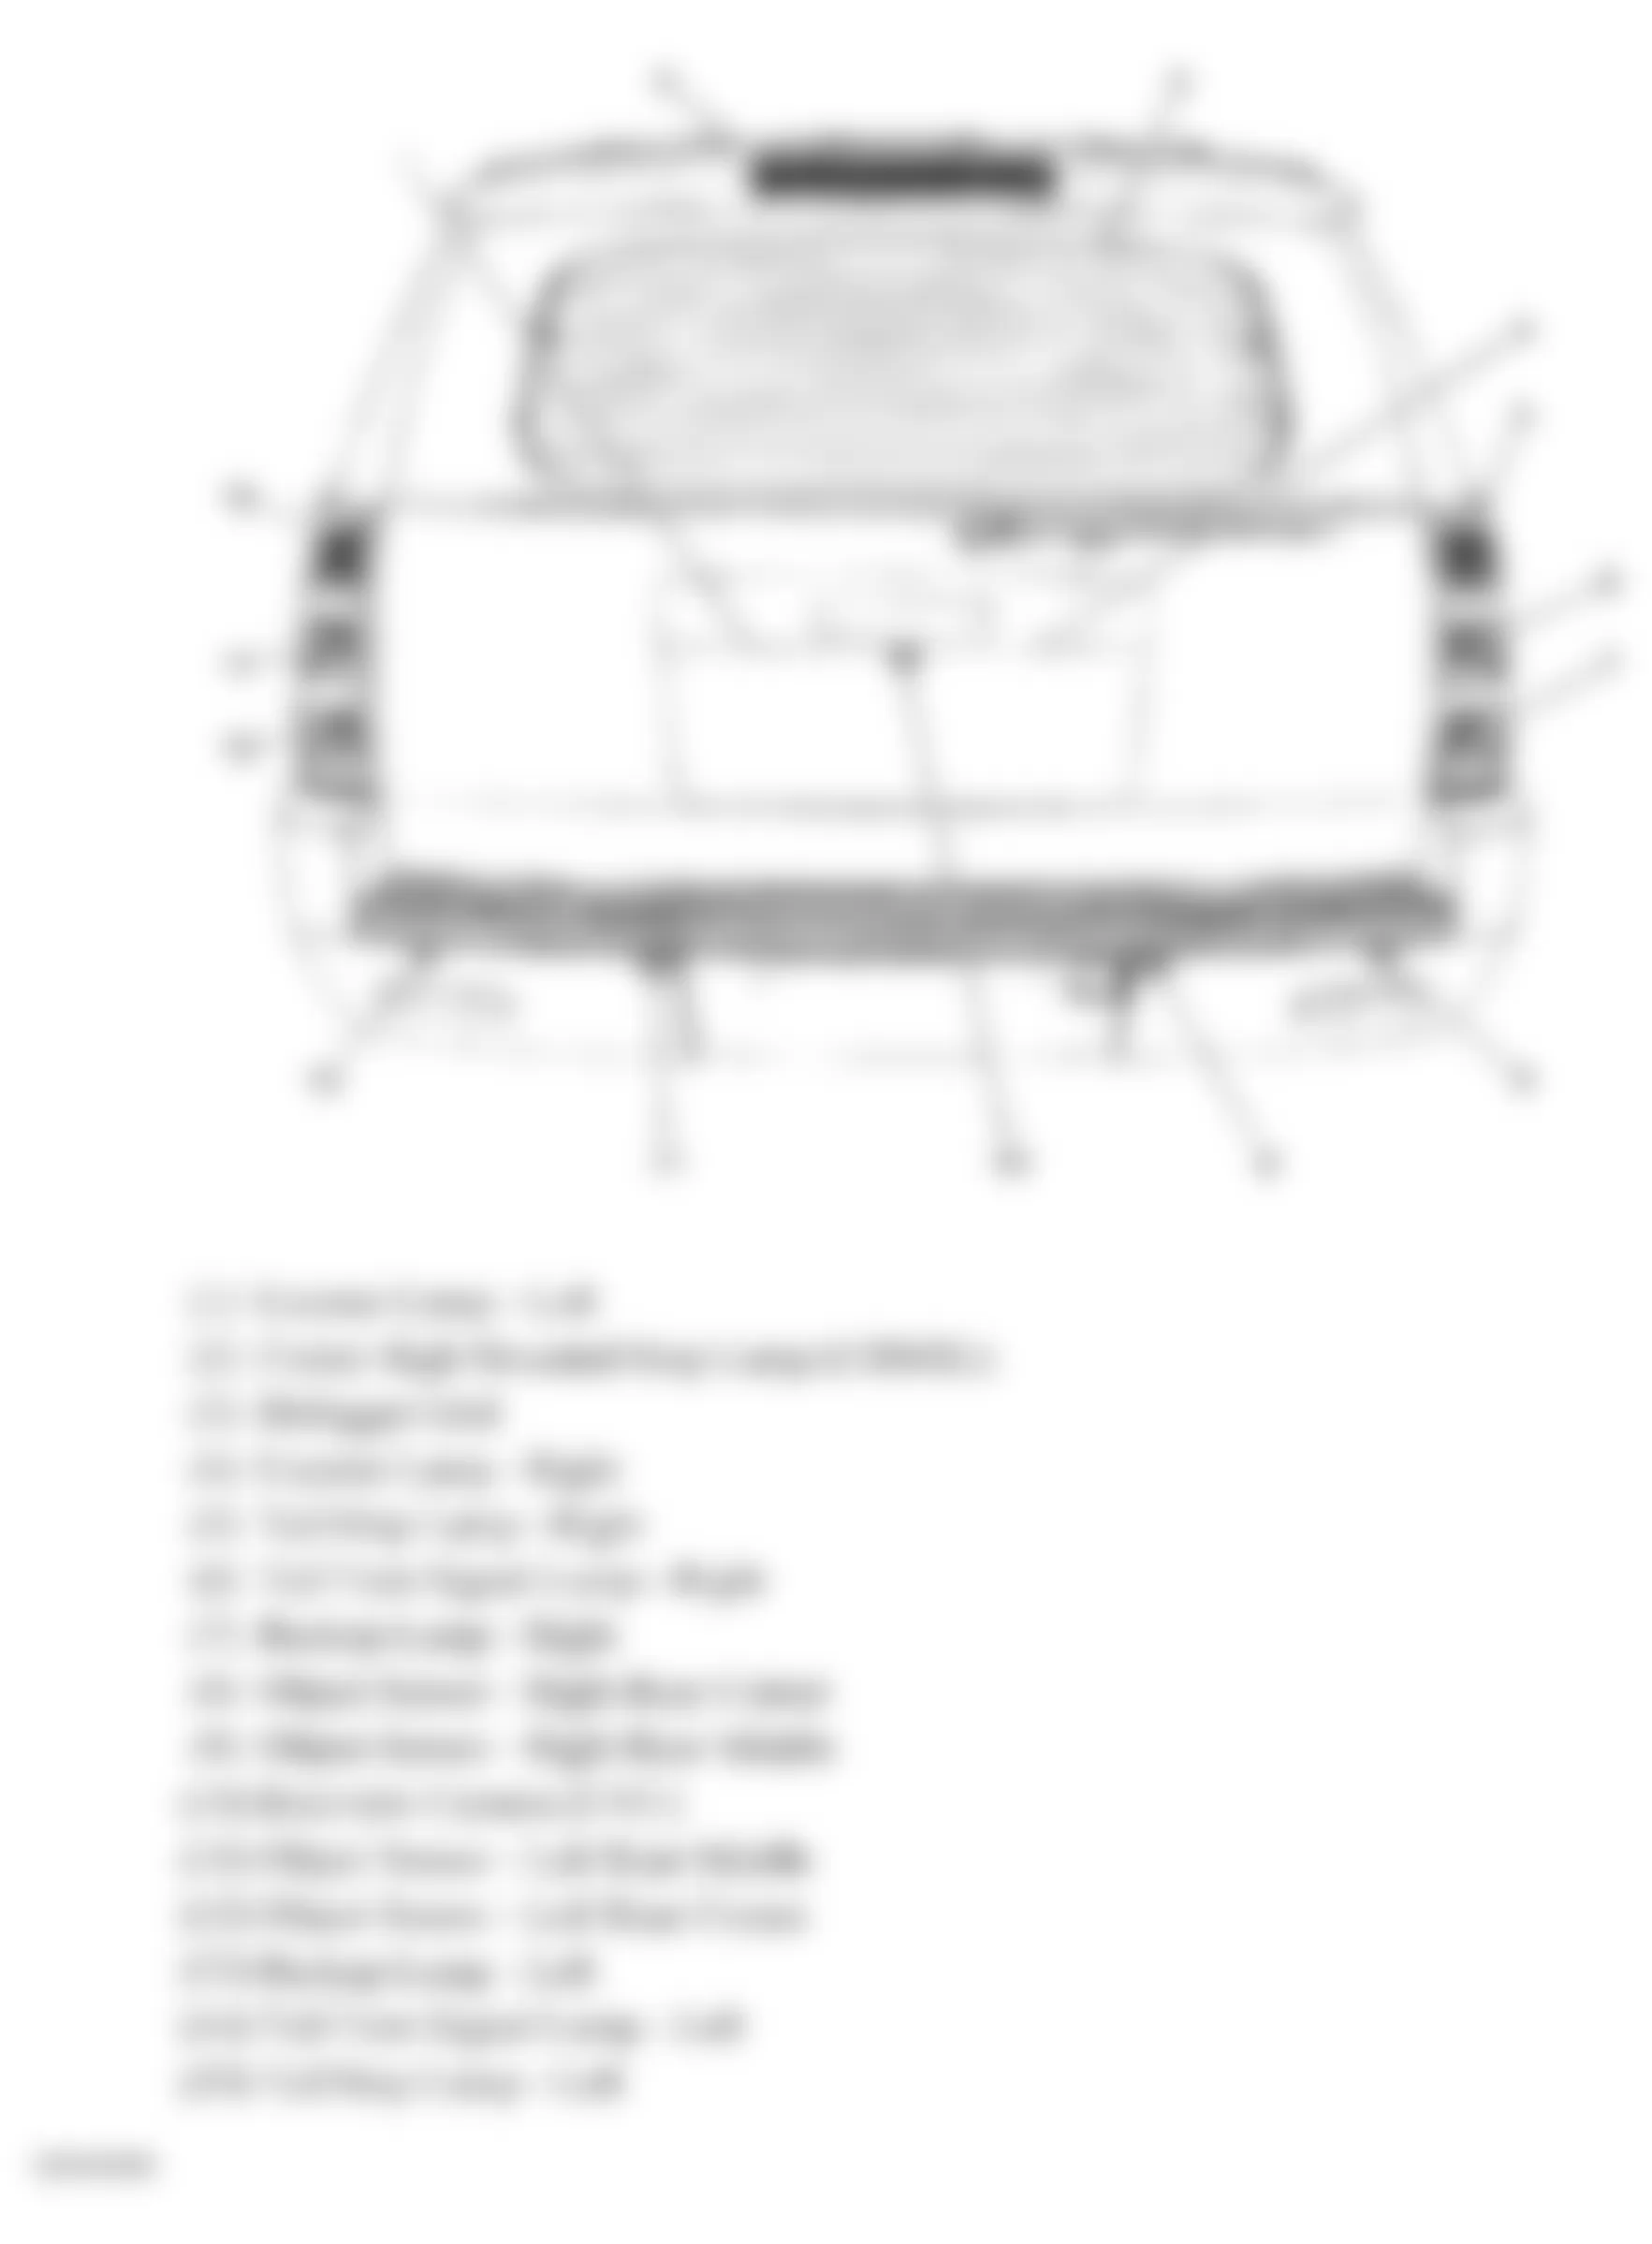 GMC Yukon 2008 - Component Locations -  Rear Of Vehicle (Yukon W/One Piece Liftgate)